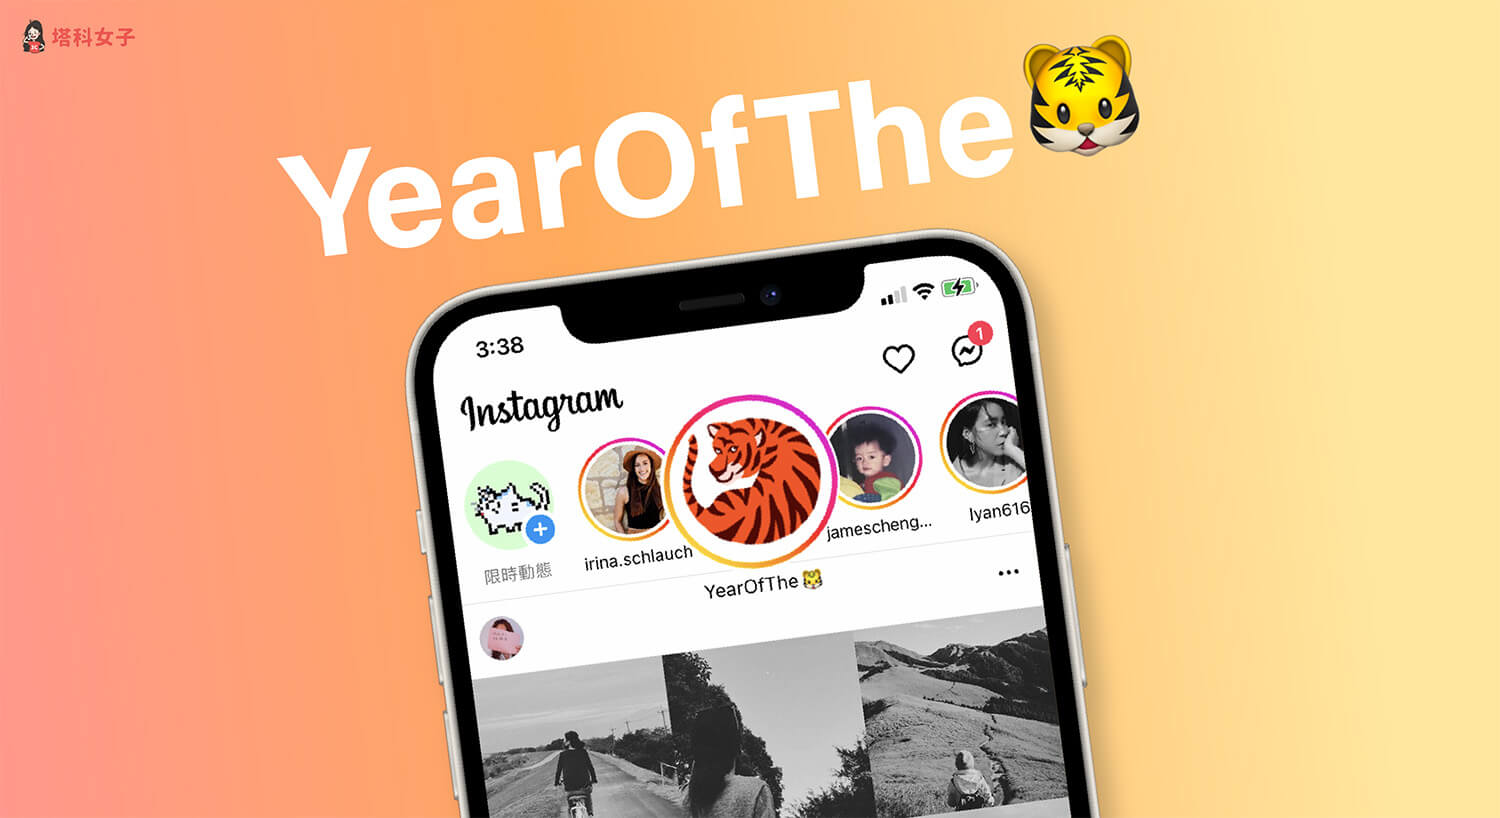 IG Year of the tiger 是什麼？集結使用虎年貼圖的 Instagram 限時動態